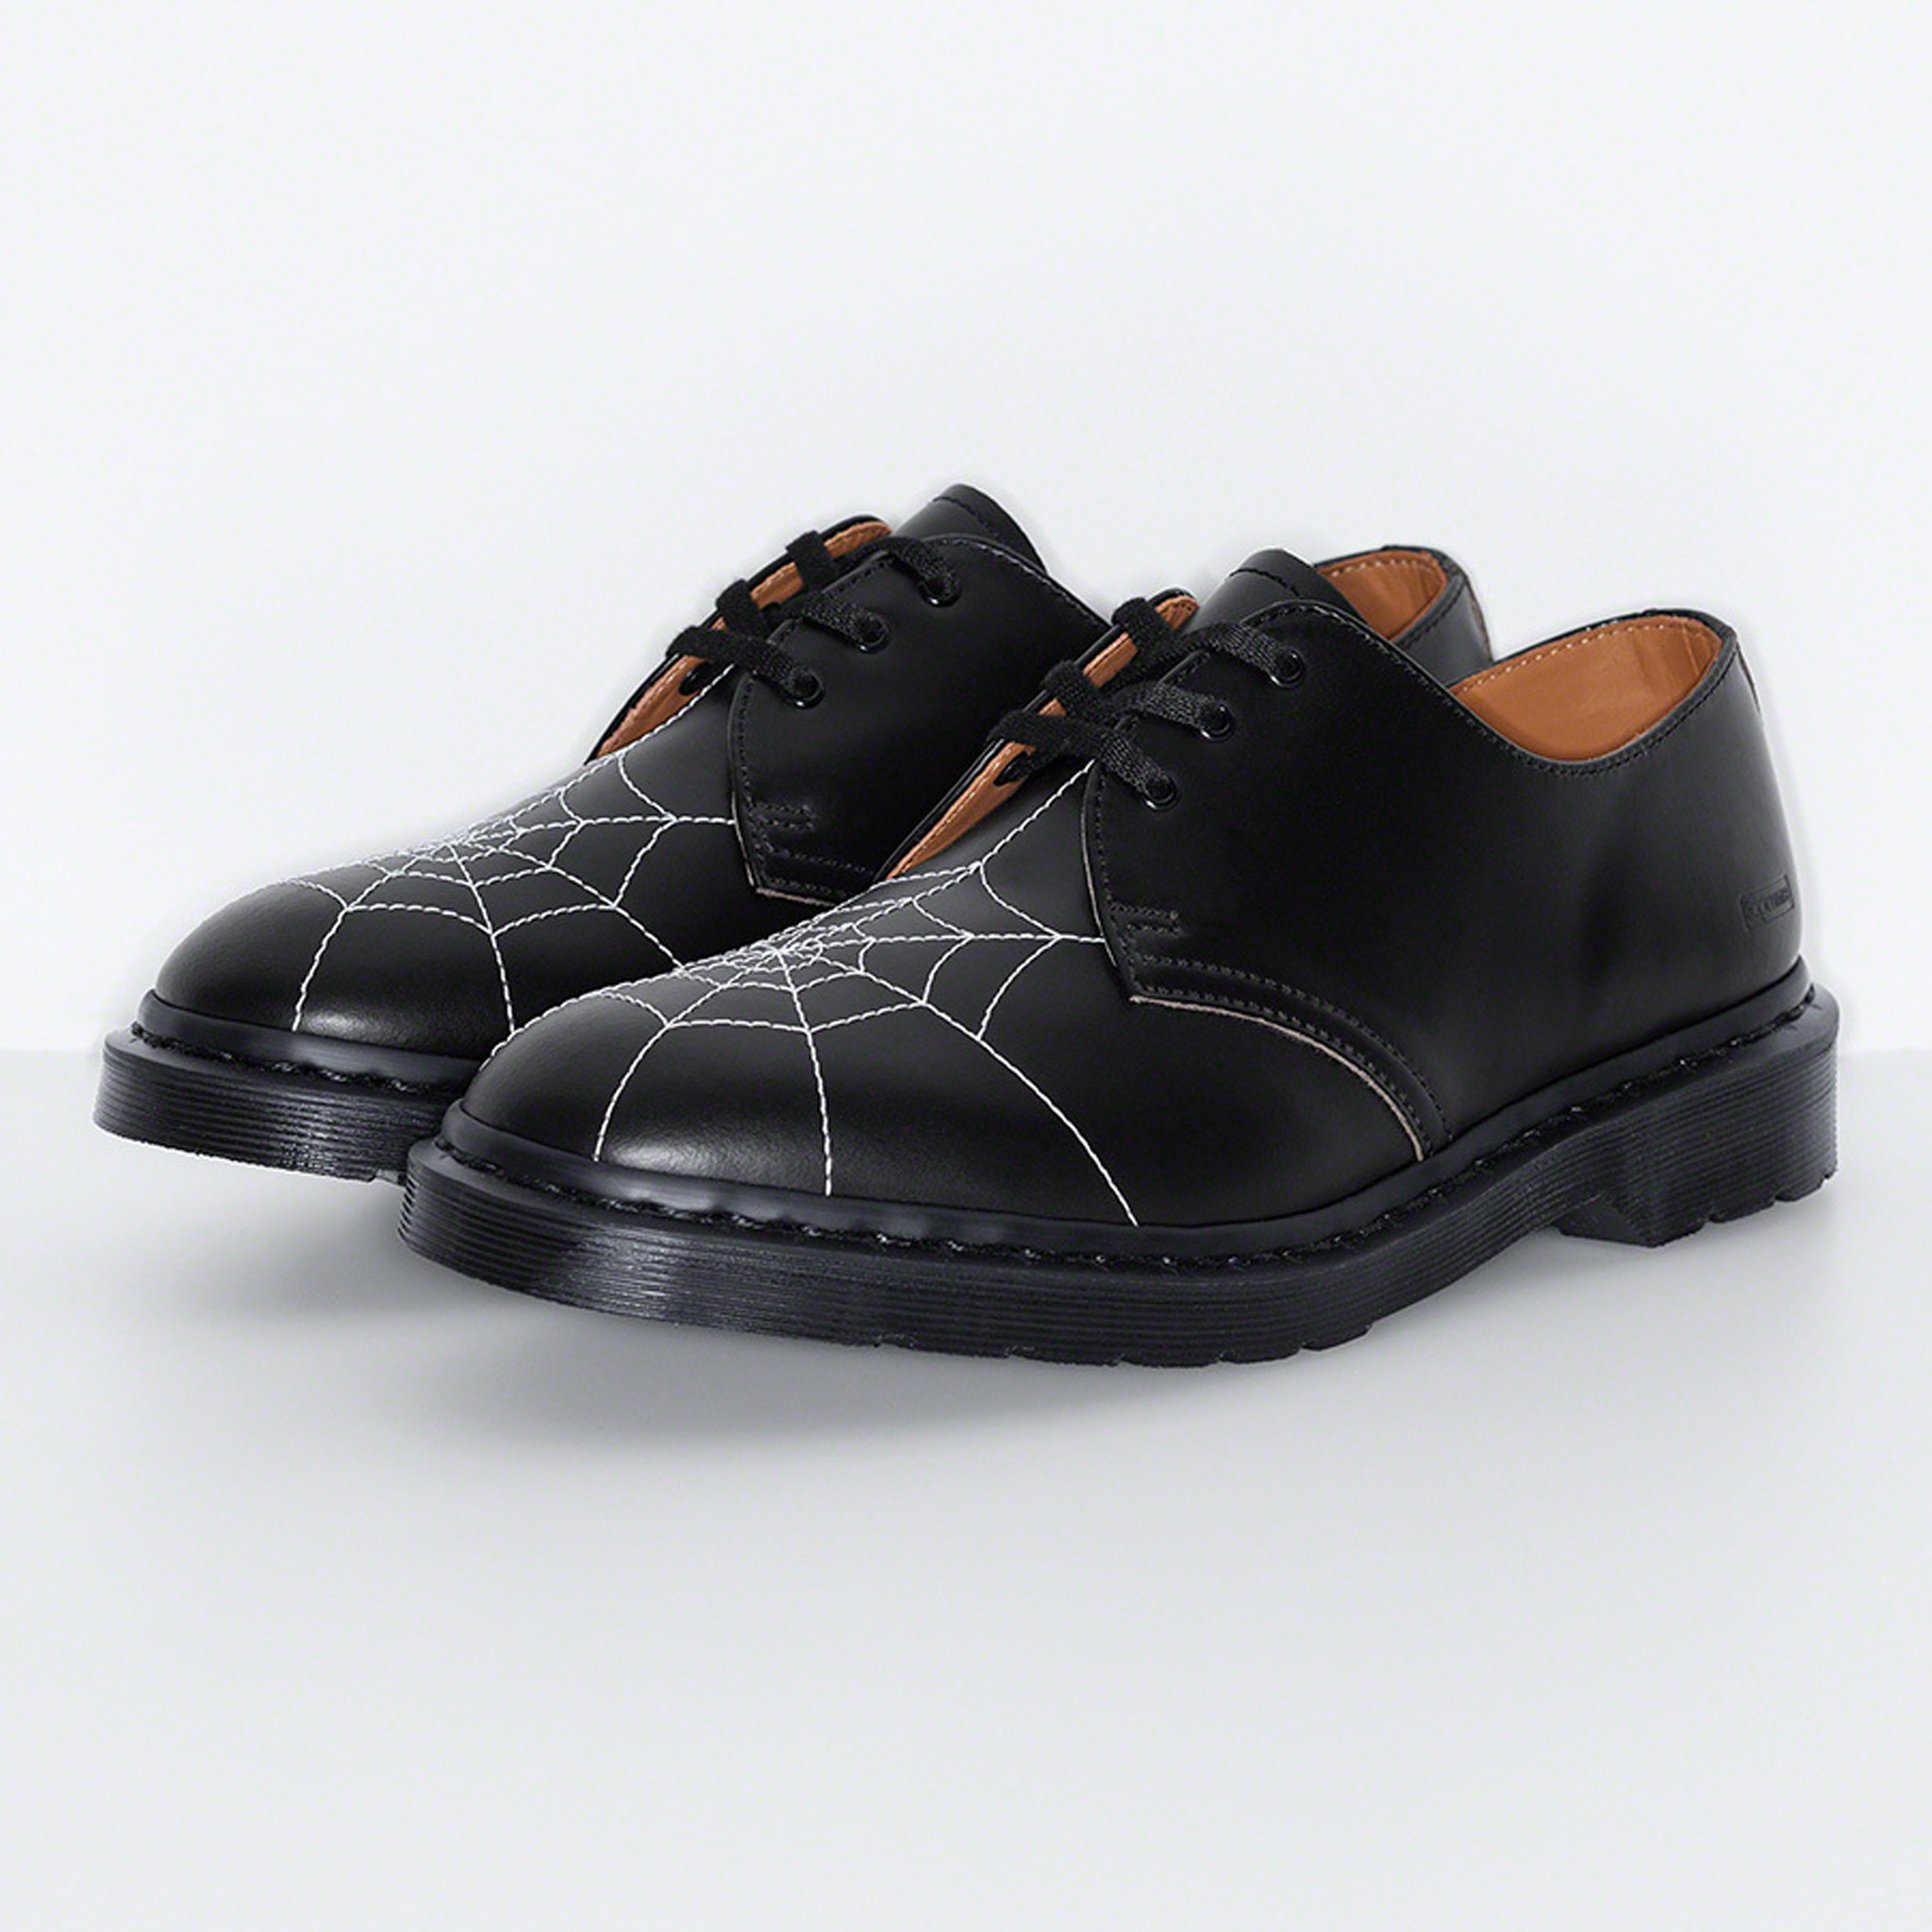 Supreme x Dr Martens Spiderweb 3-Eye Shoe Black | Supreme - SLN